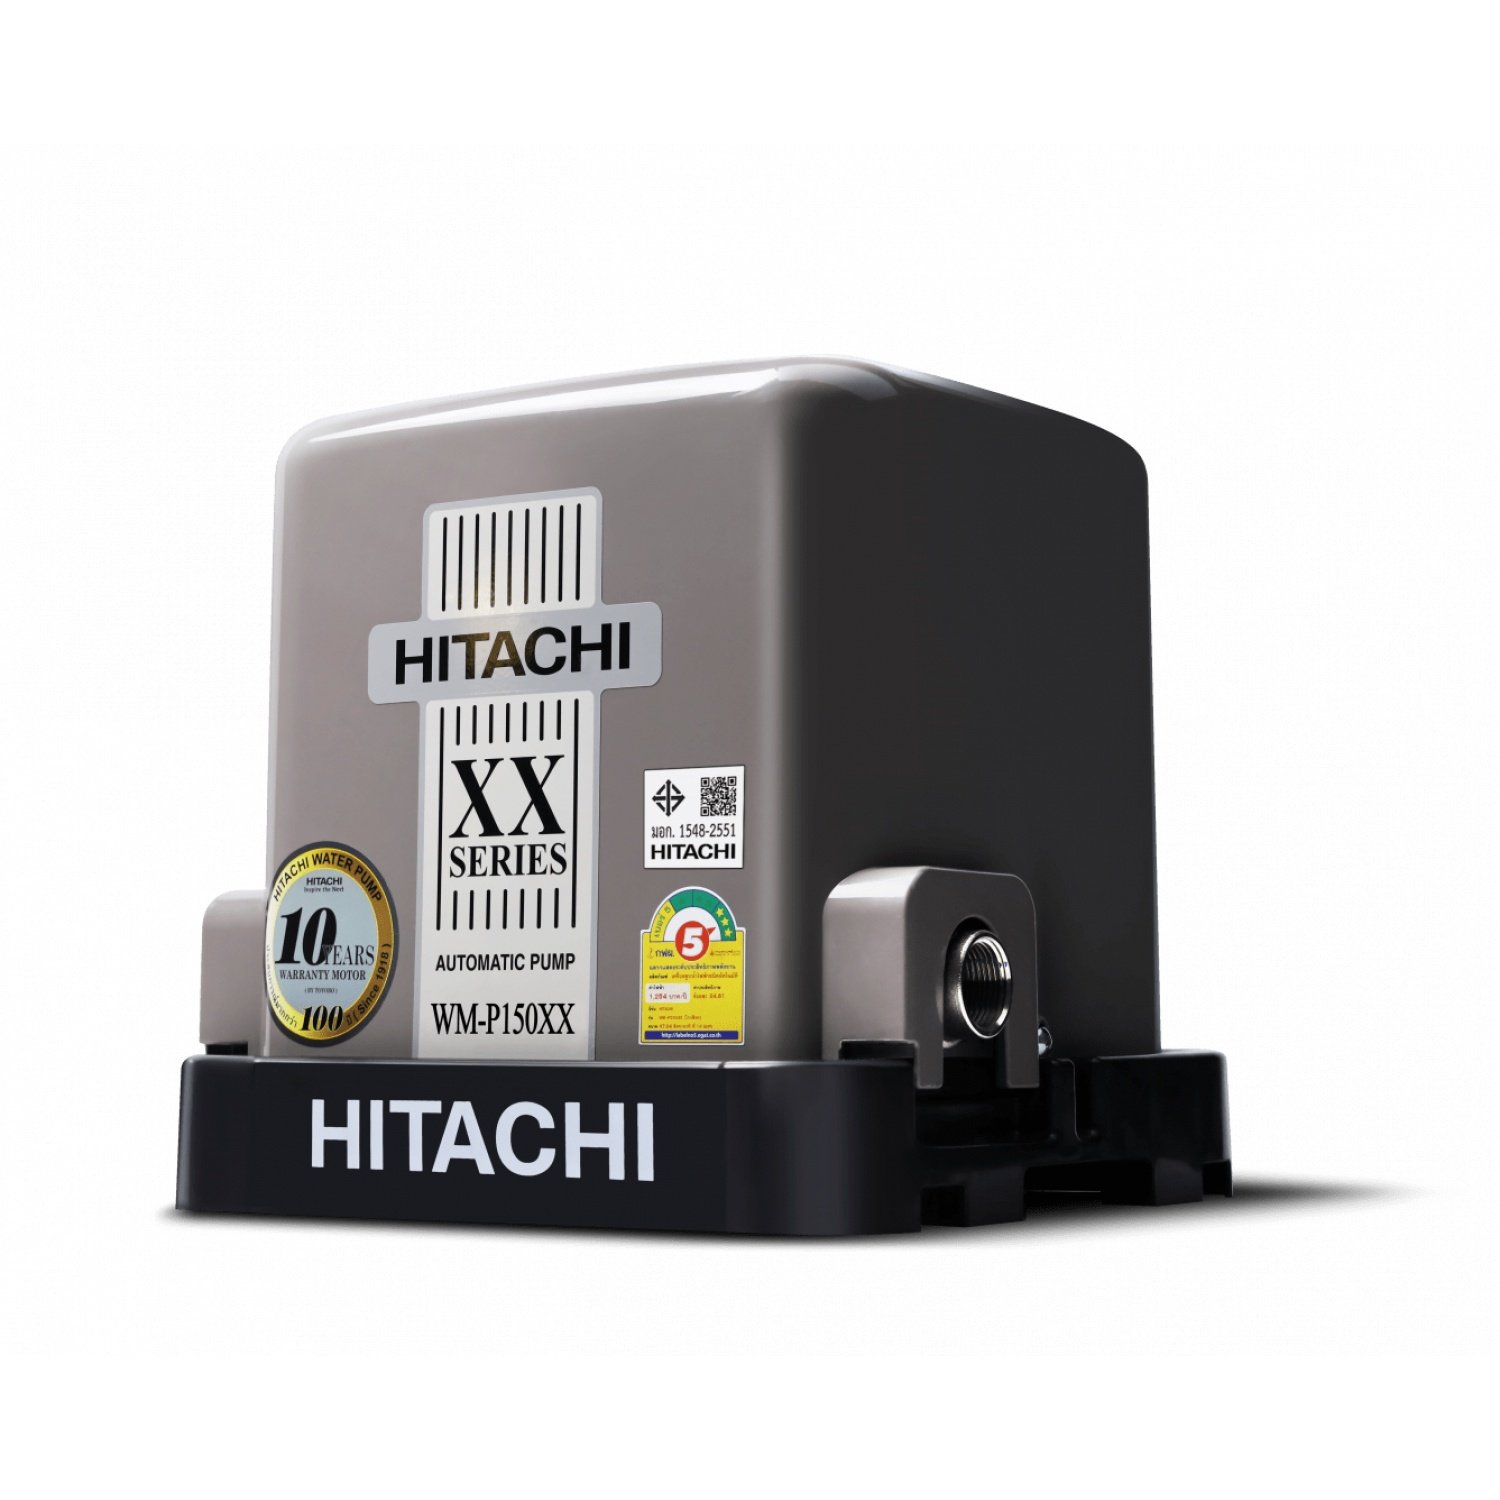 HITACHI ปั๊มน้ำอัตโนมัติ WM-P250XX 250 วัตต์ | ปั้มน้ำ ปั๊มน้ำ ปั้มน้ำอัตโนมัติ ปั้มน้ำแรงดันคงที่ ปั๊มน้ำแรงดันคงที่(copy)